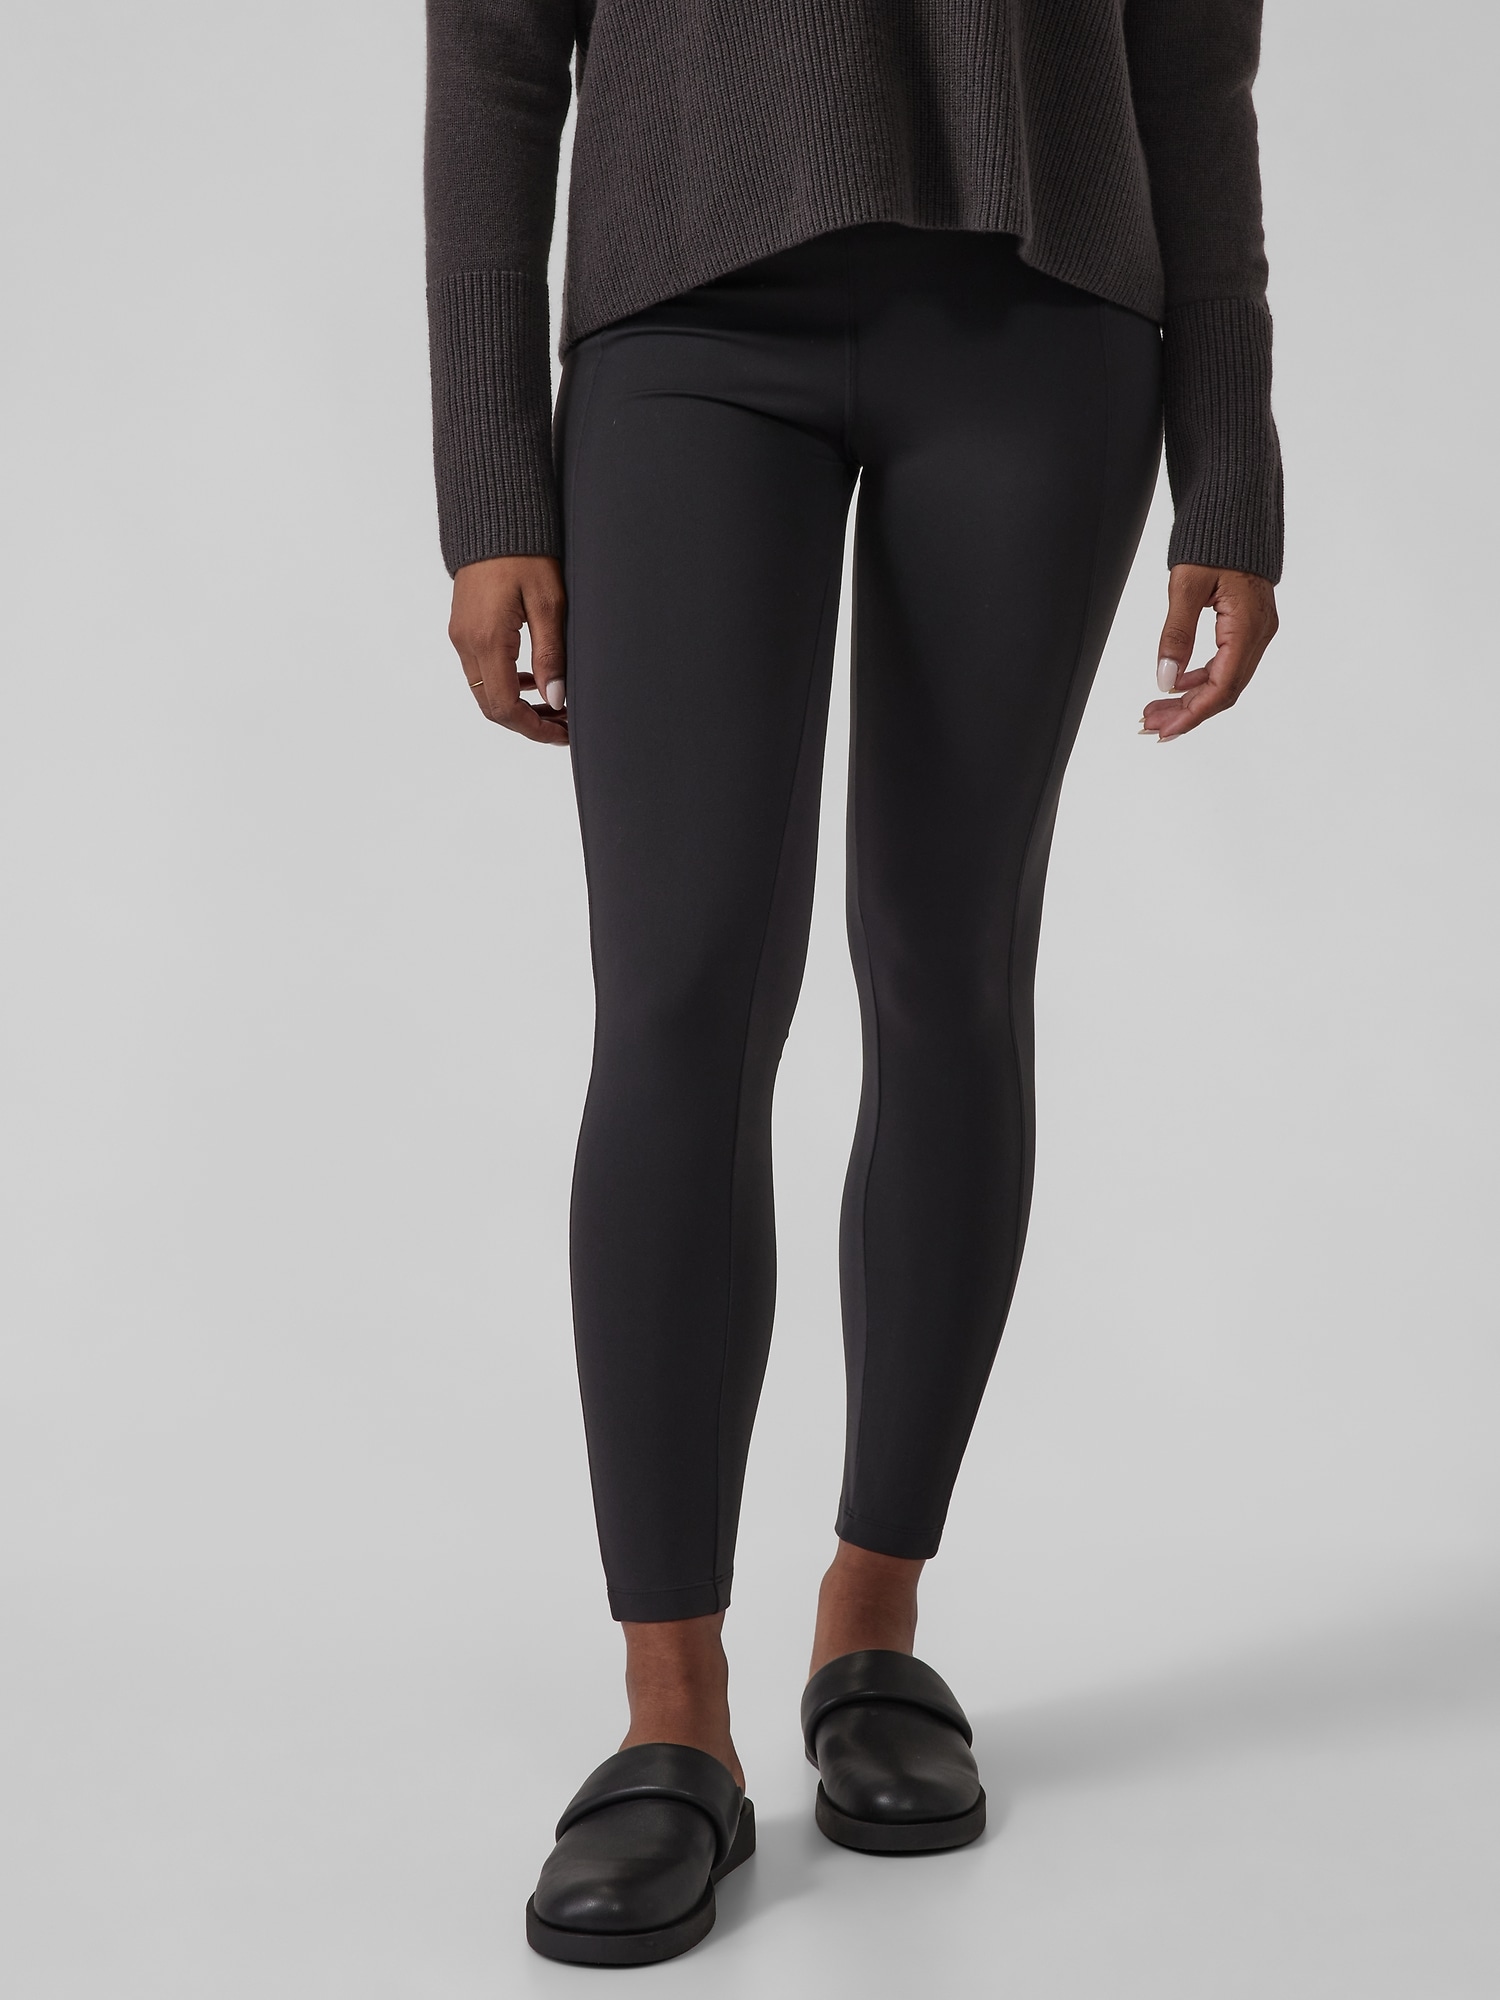 NWT Athleta Small Black Delancey Flare Yoga Pants Leggings Back Pockets  $109